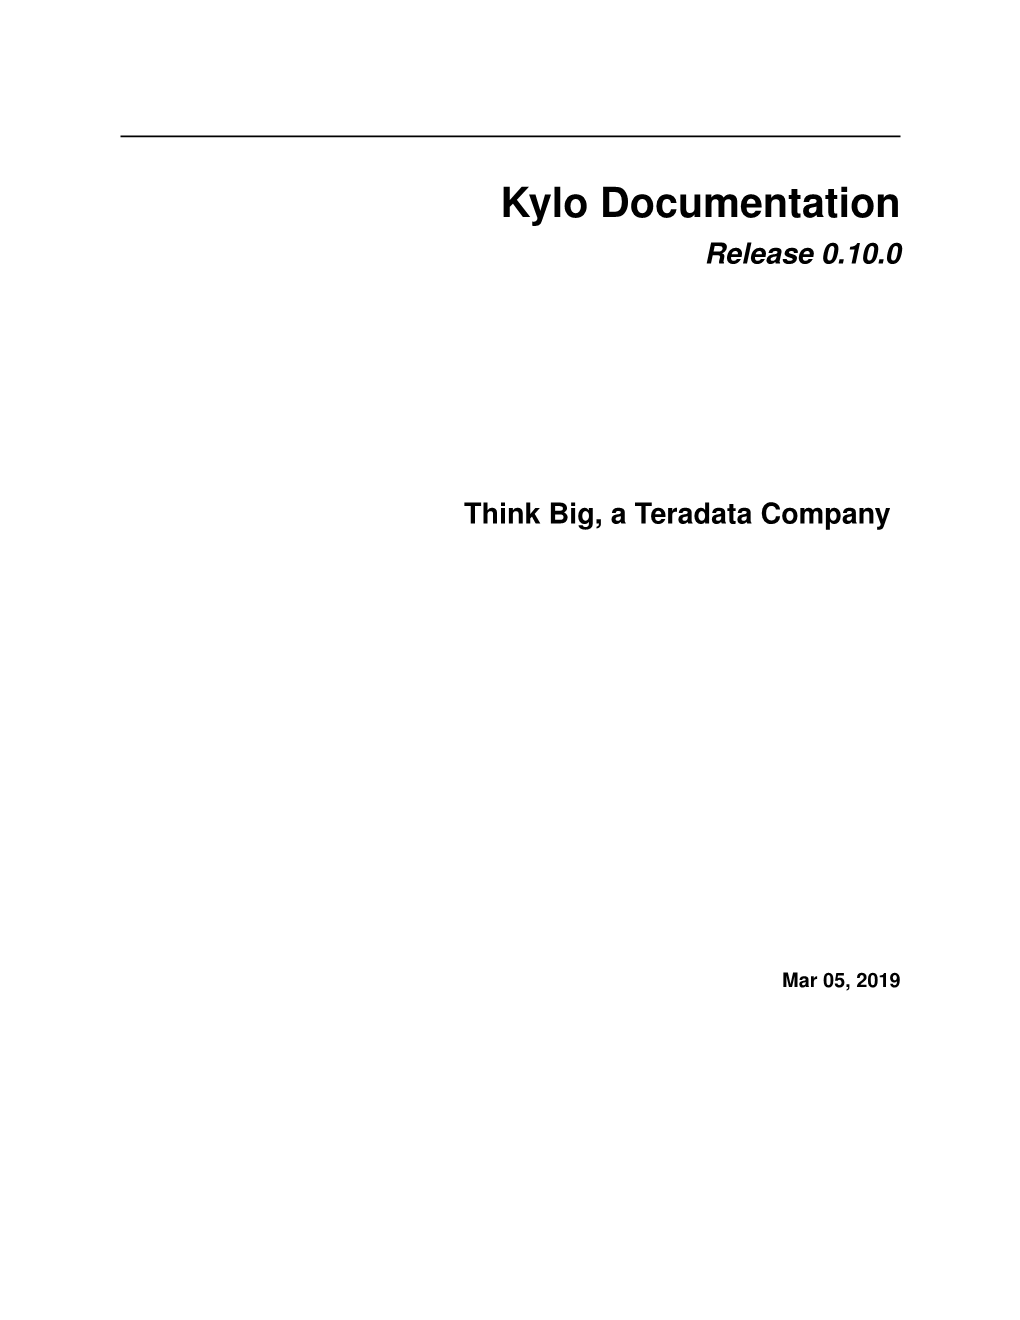 Kylo Documentation Release 0.10.0